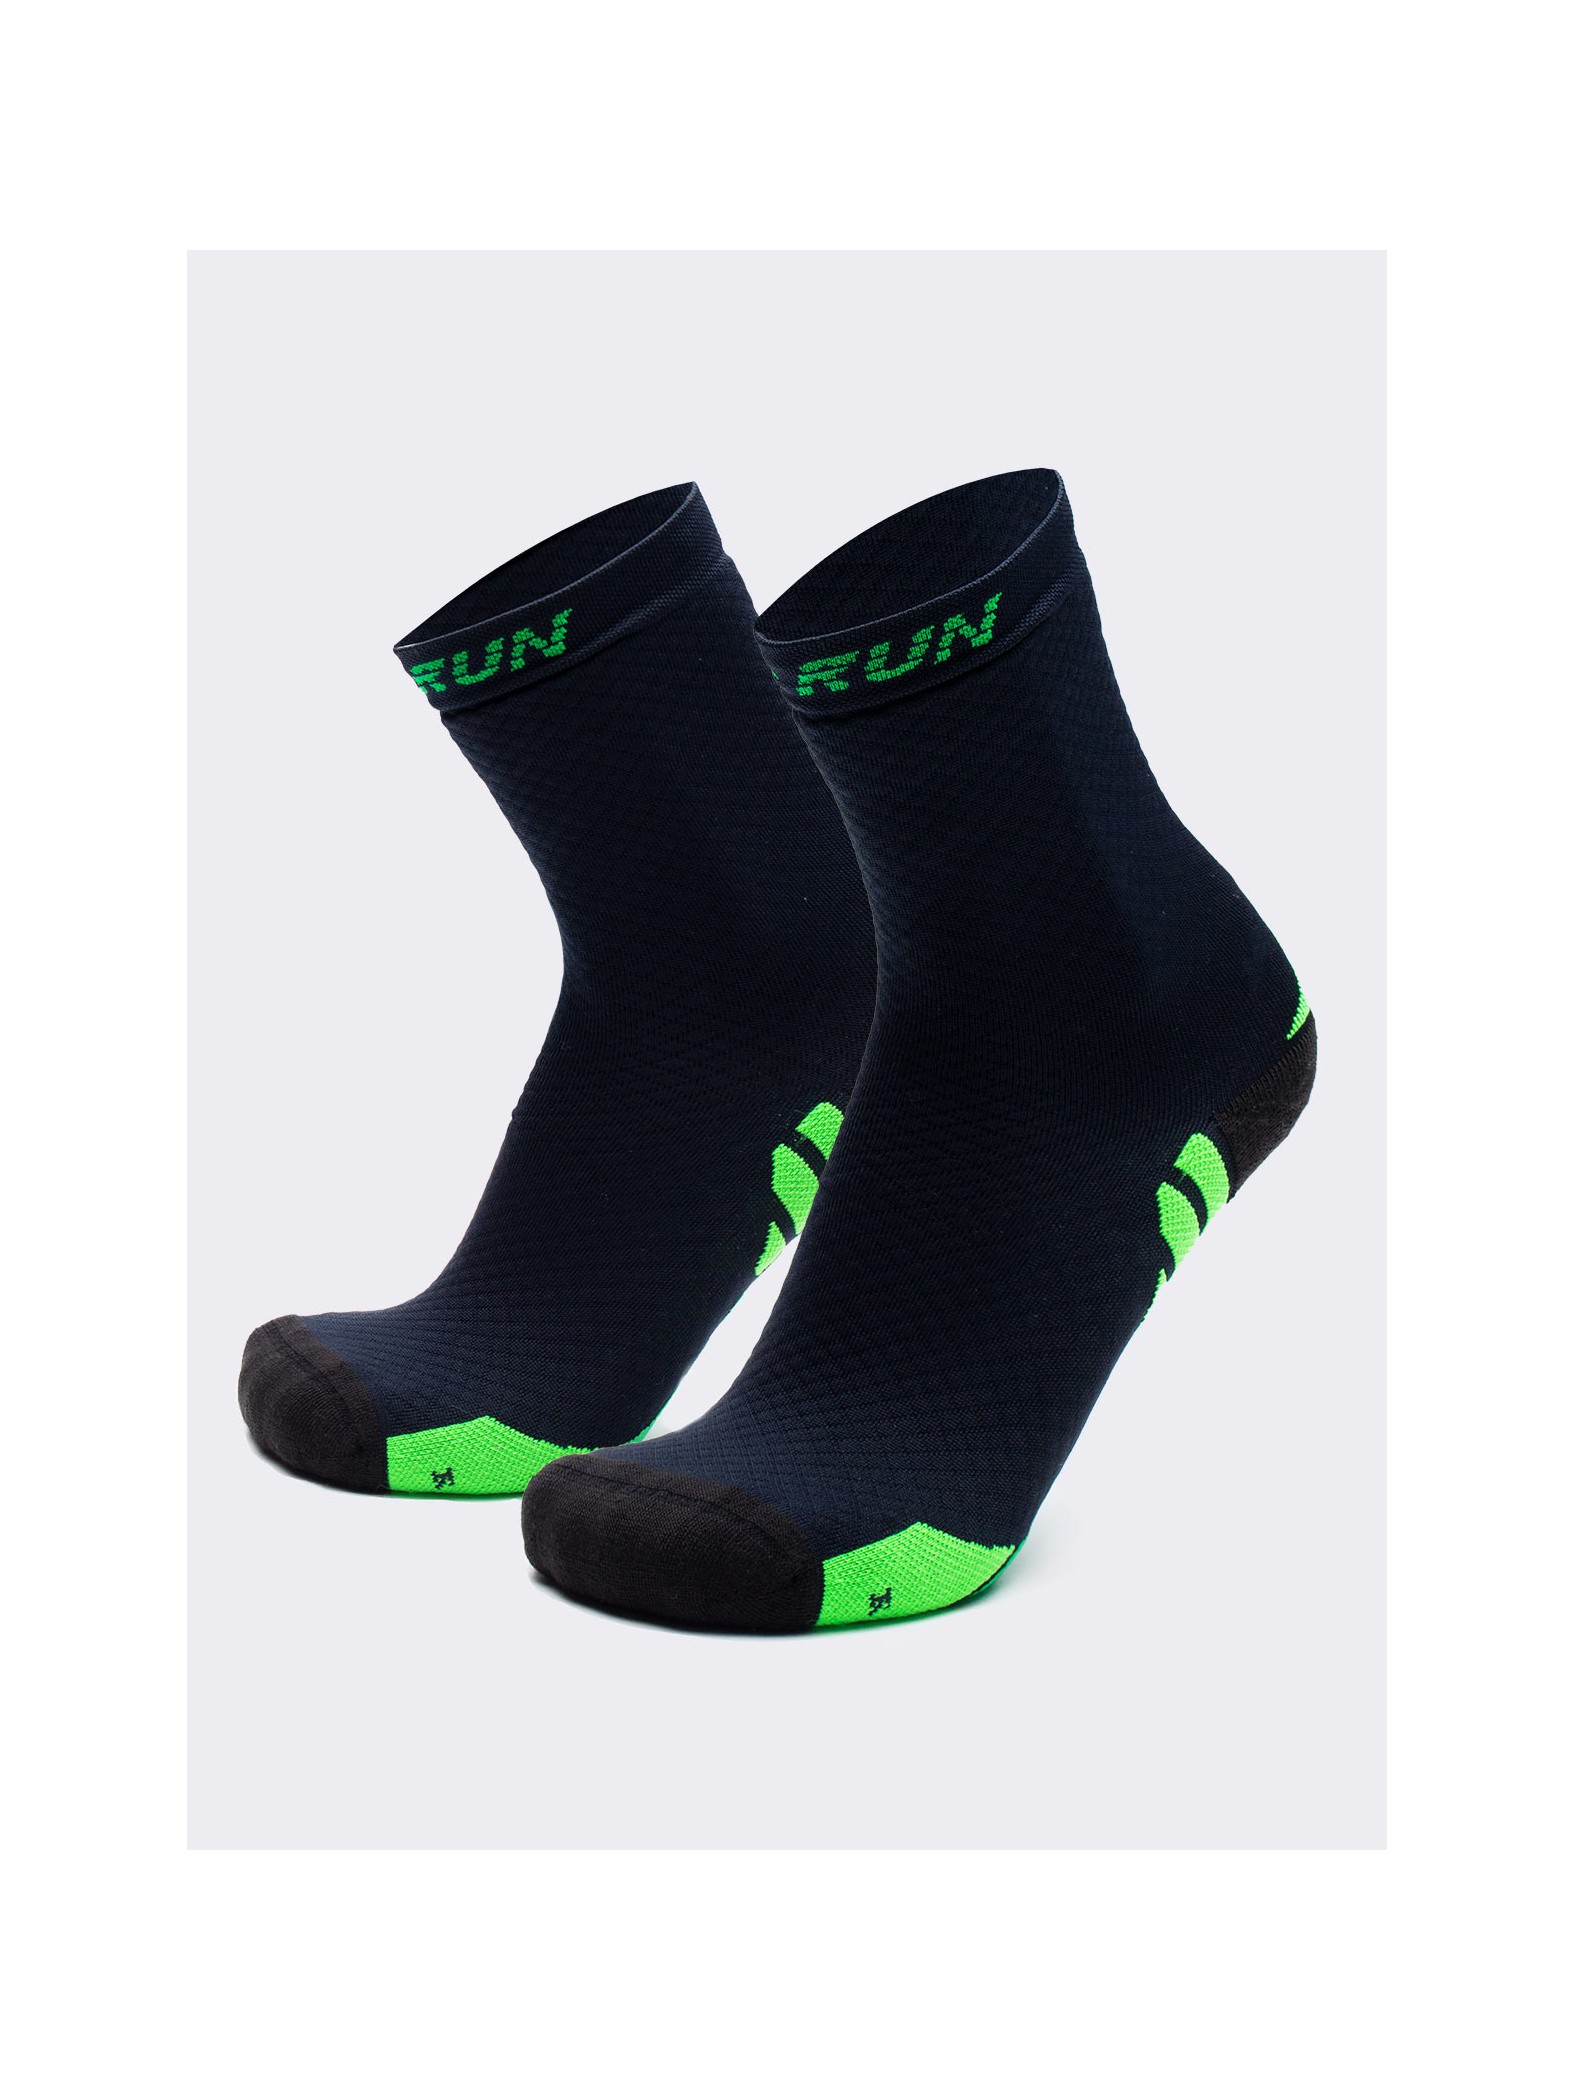 Running 3D compression short socks in Dryarn